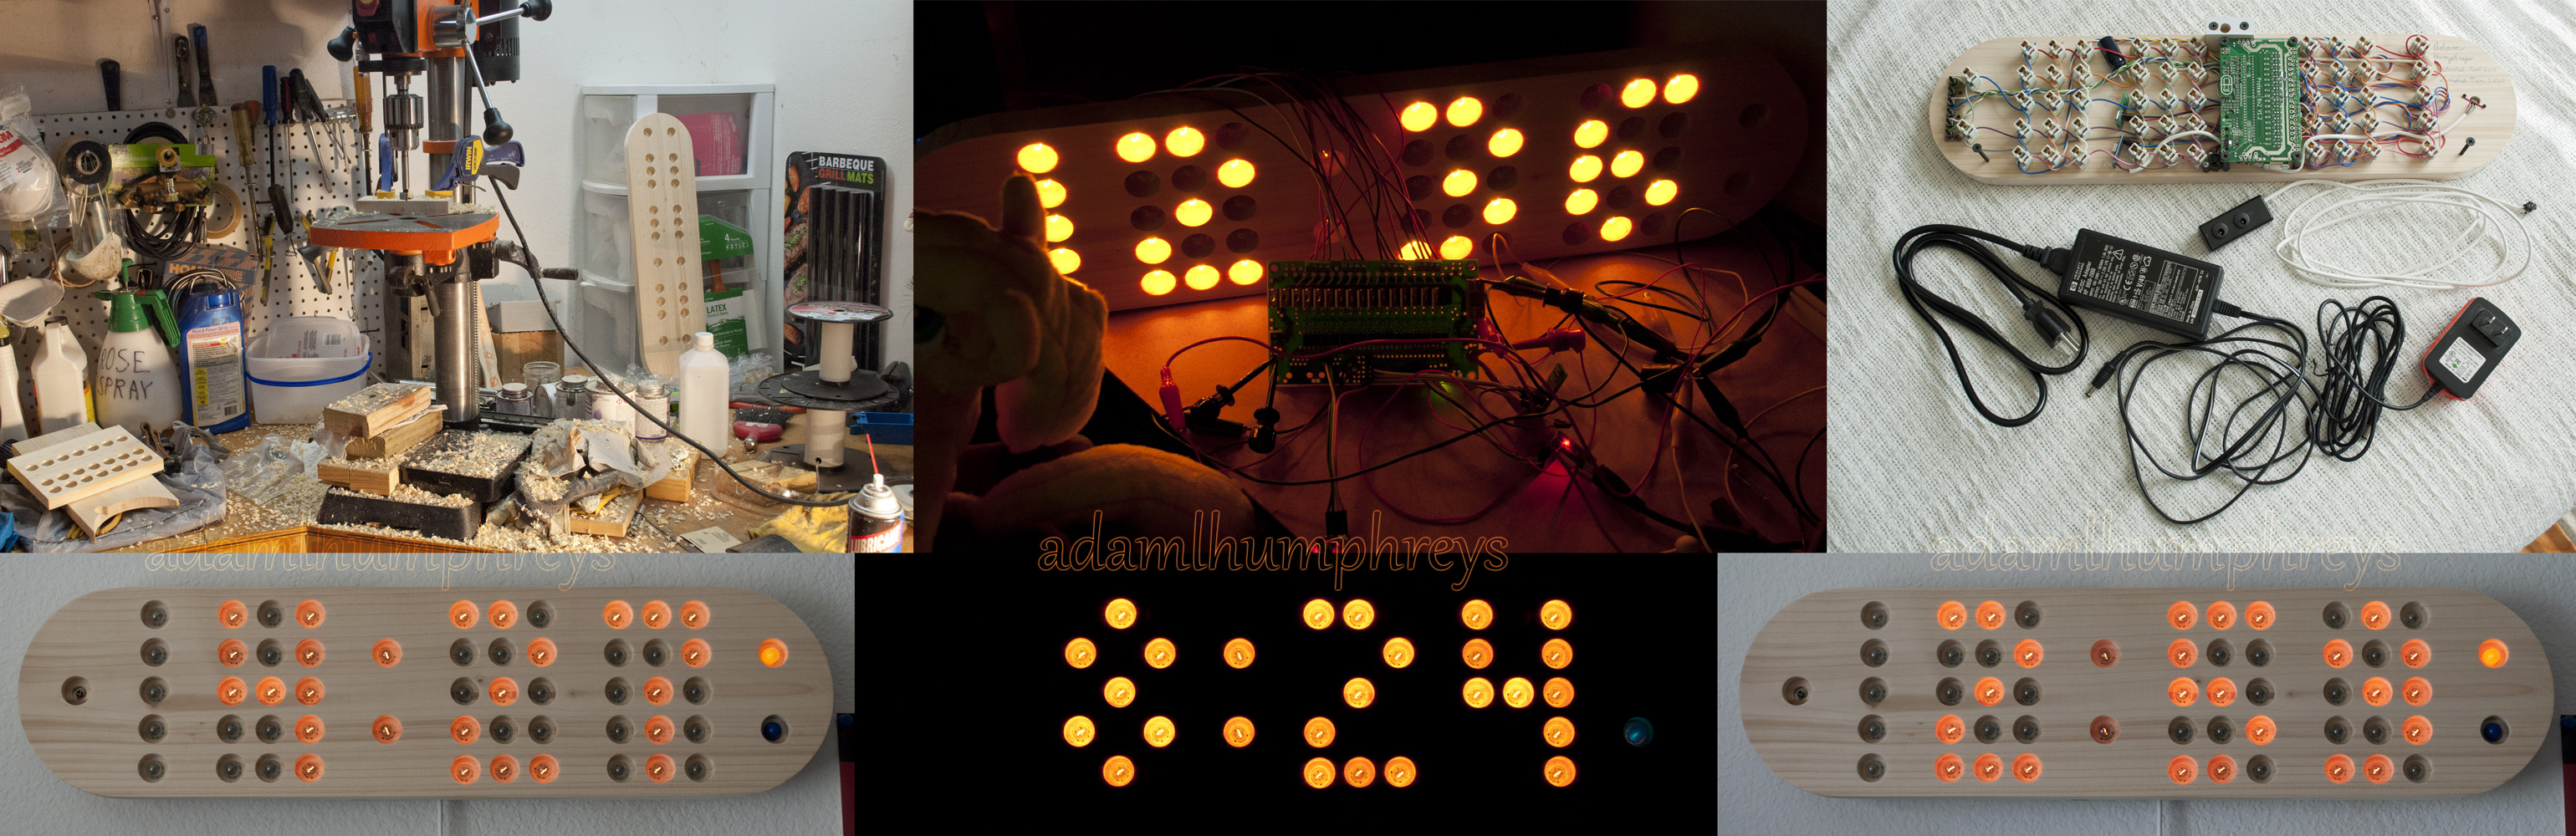 Protean8x2 Remote Controlled Incandescent Clock